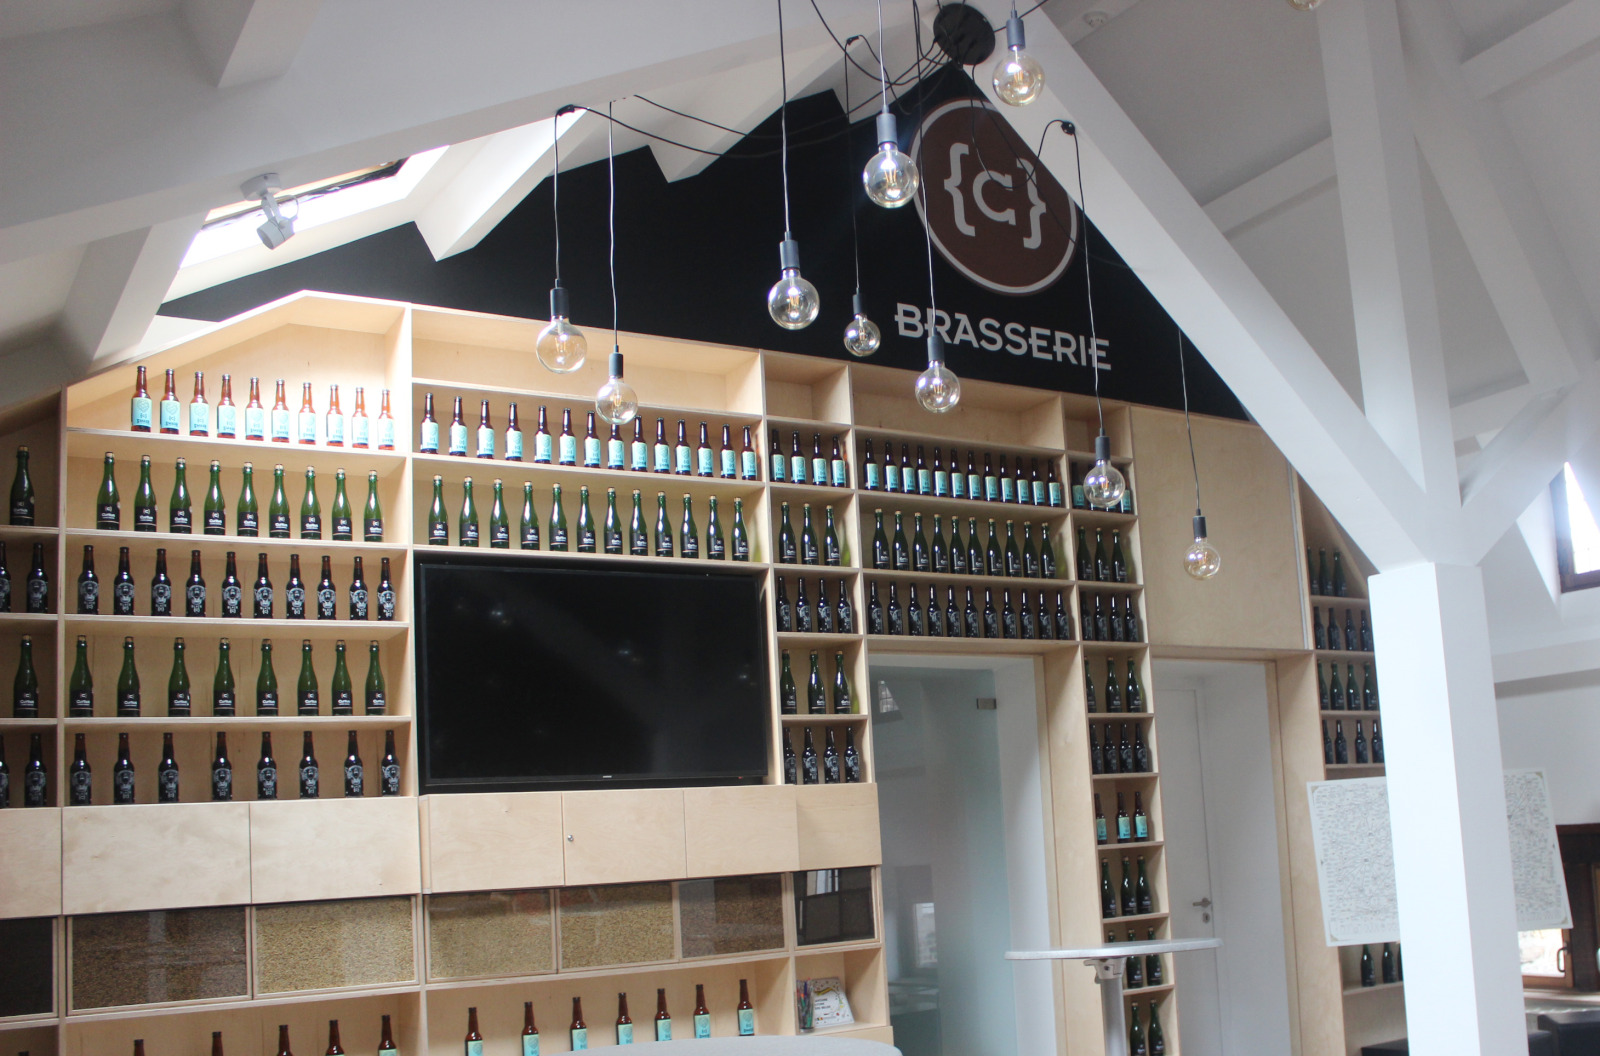 Wall of beer bottles inside the Brasserie C microbrewery in Liège - gourmet tour of Liège